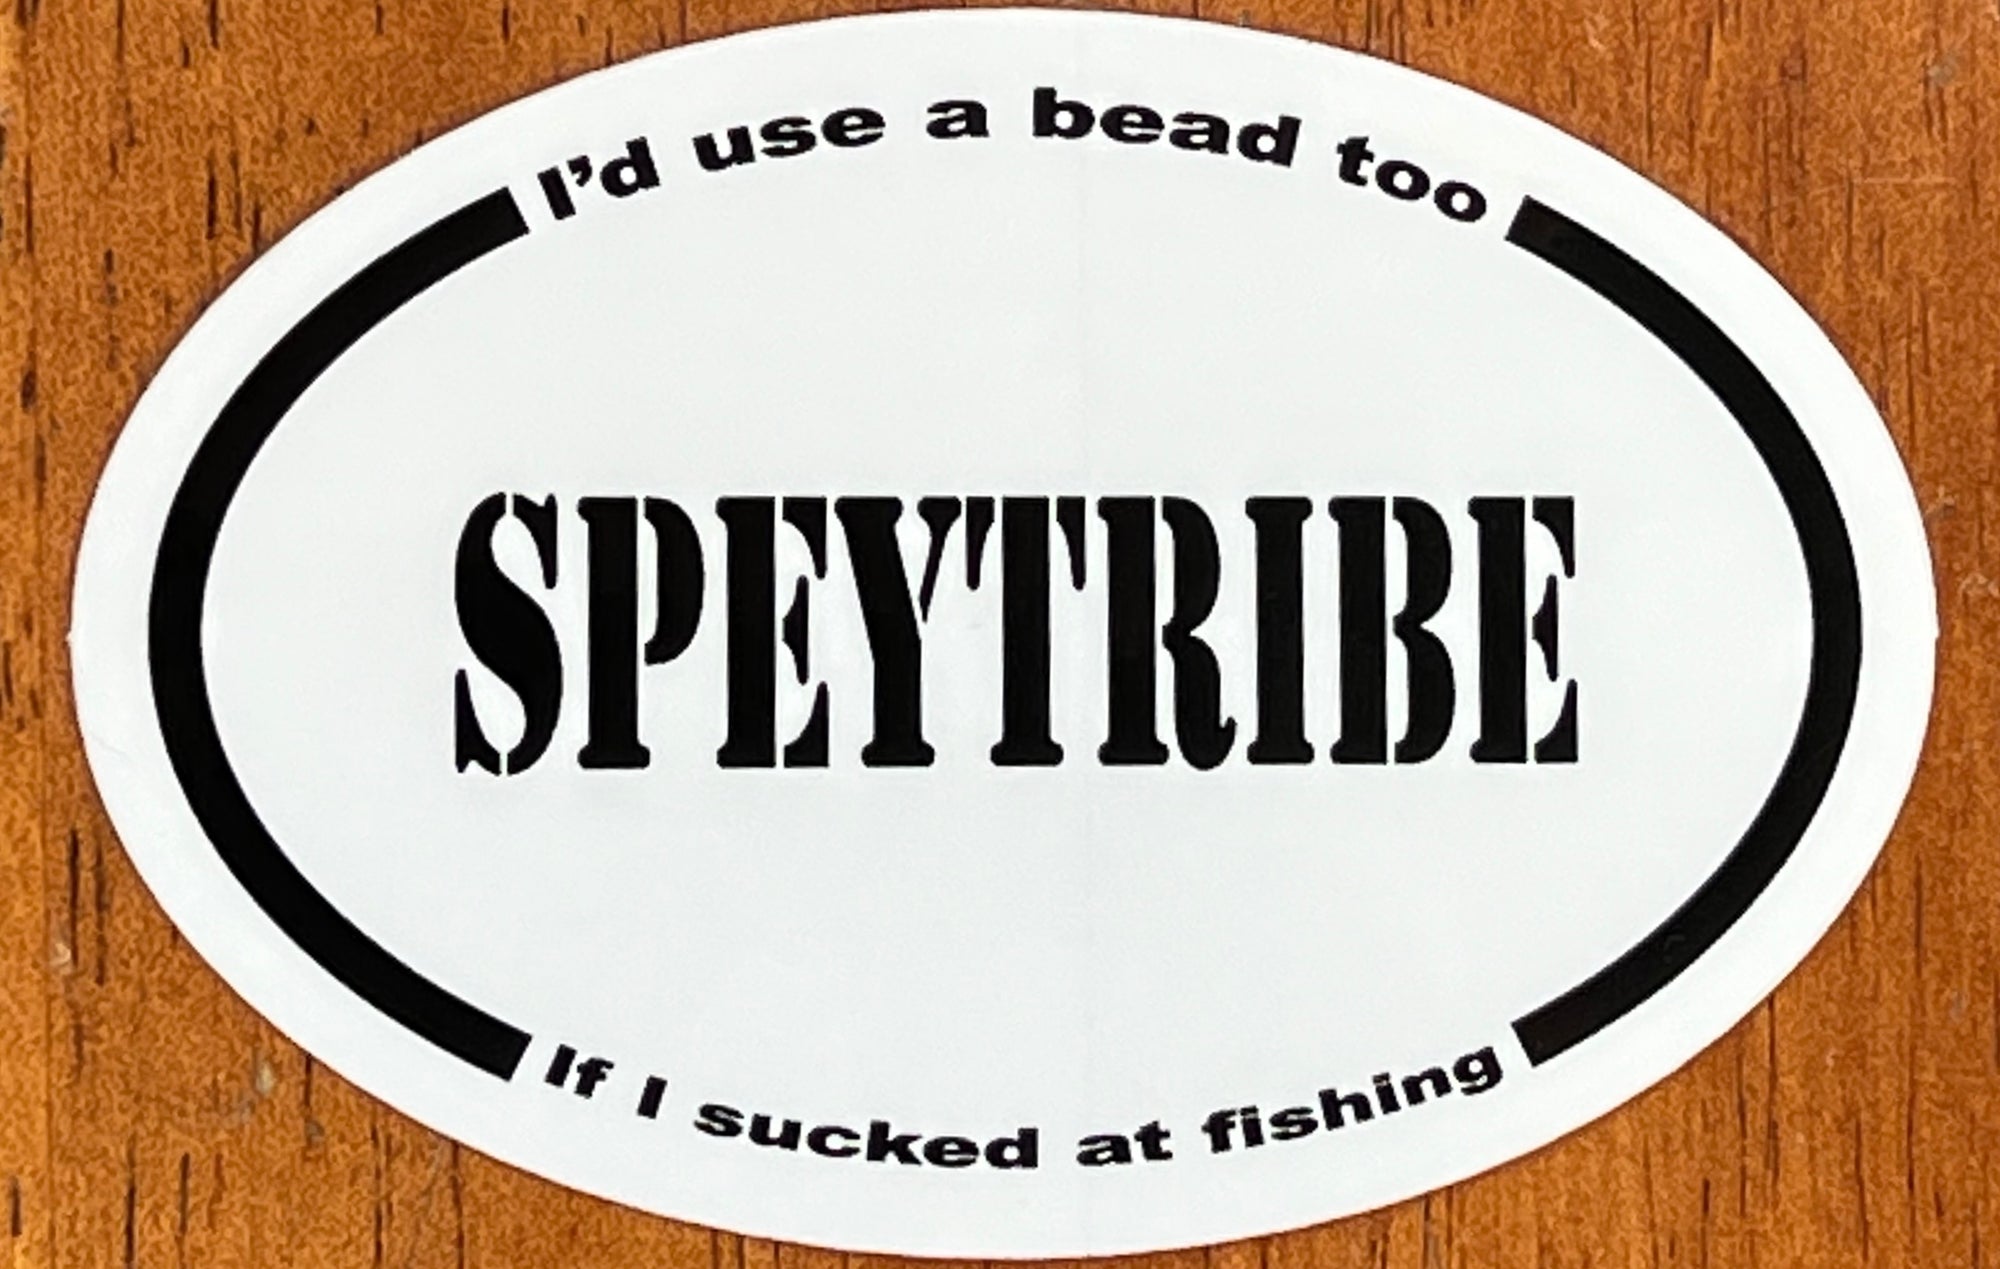 SPEYTRIBE Sticker